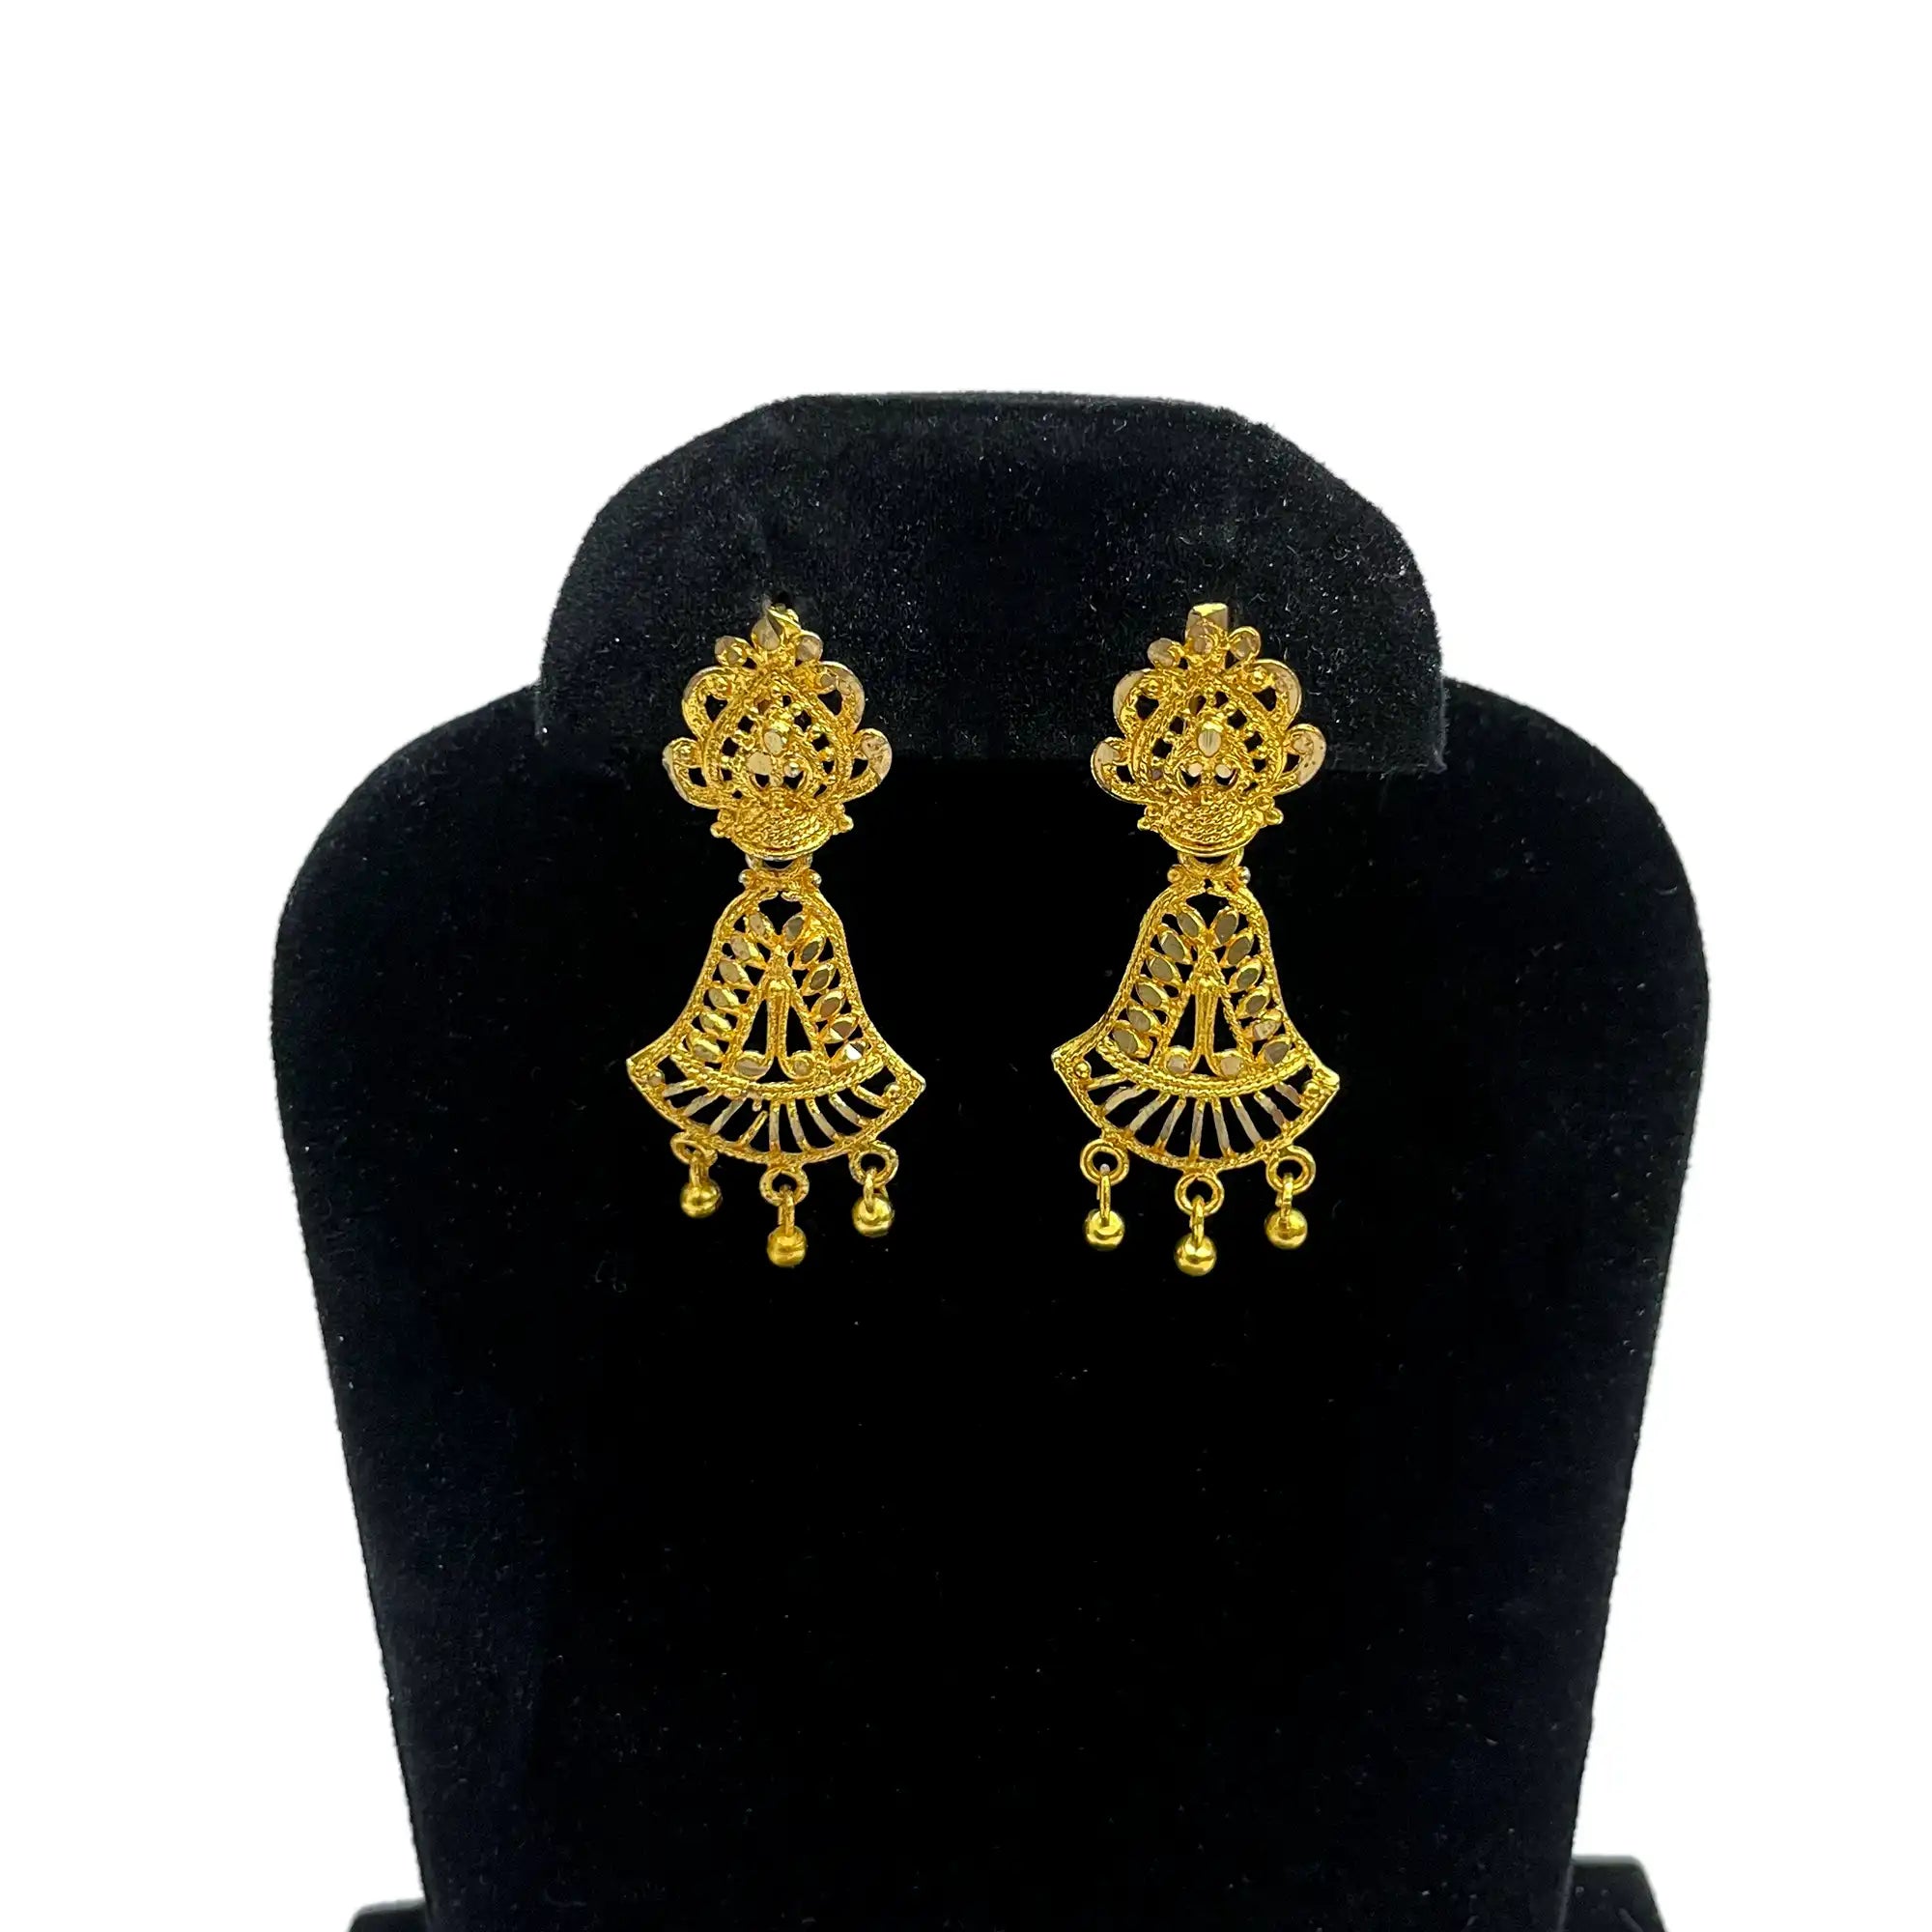 dubai fastion jewelry, bridal wedding earrings, gold plated earrings